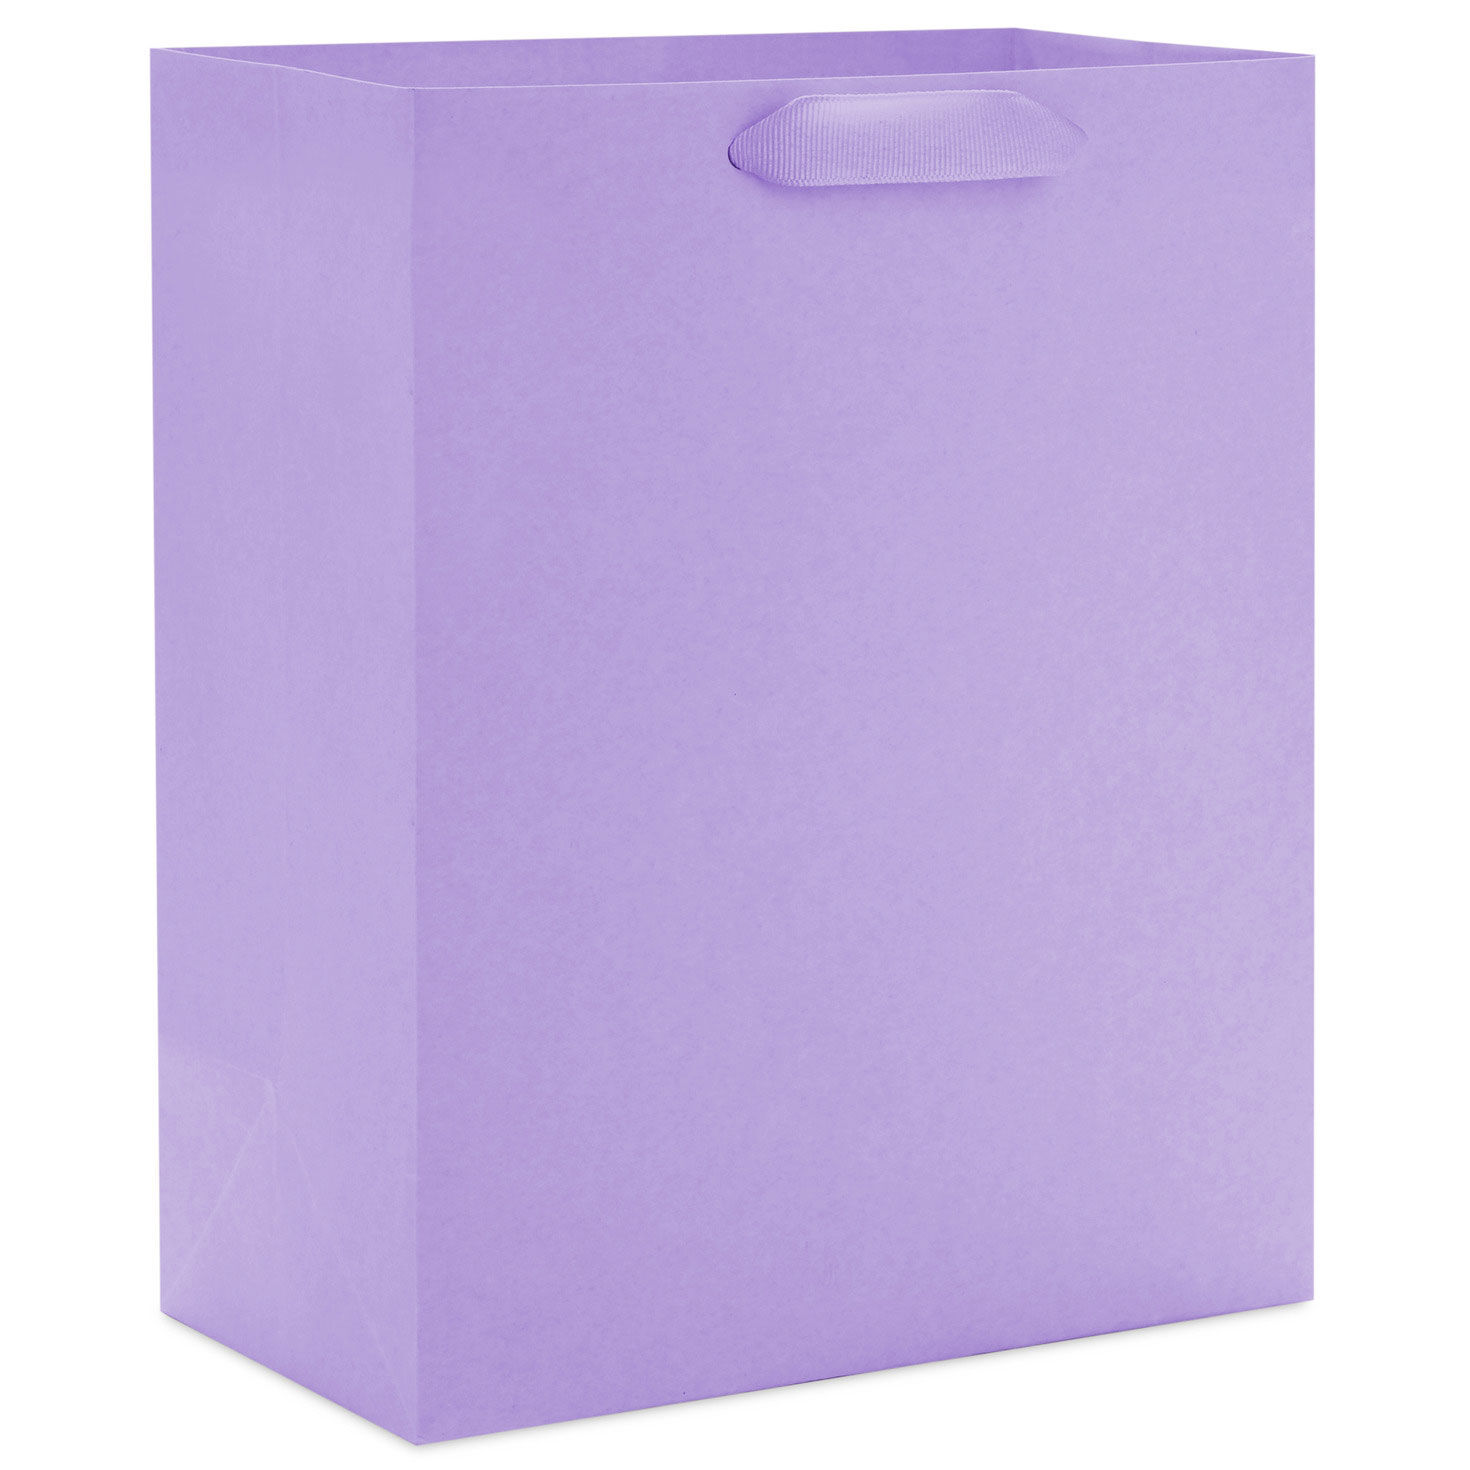 9.6 Lavender Medium Gift Bag - Gift Bags - Hallmark